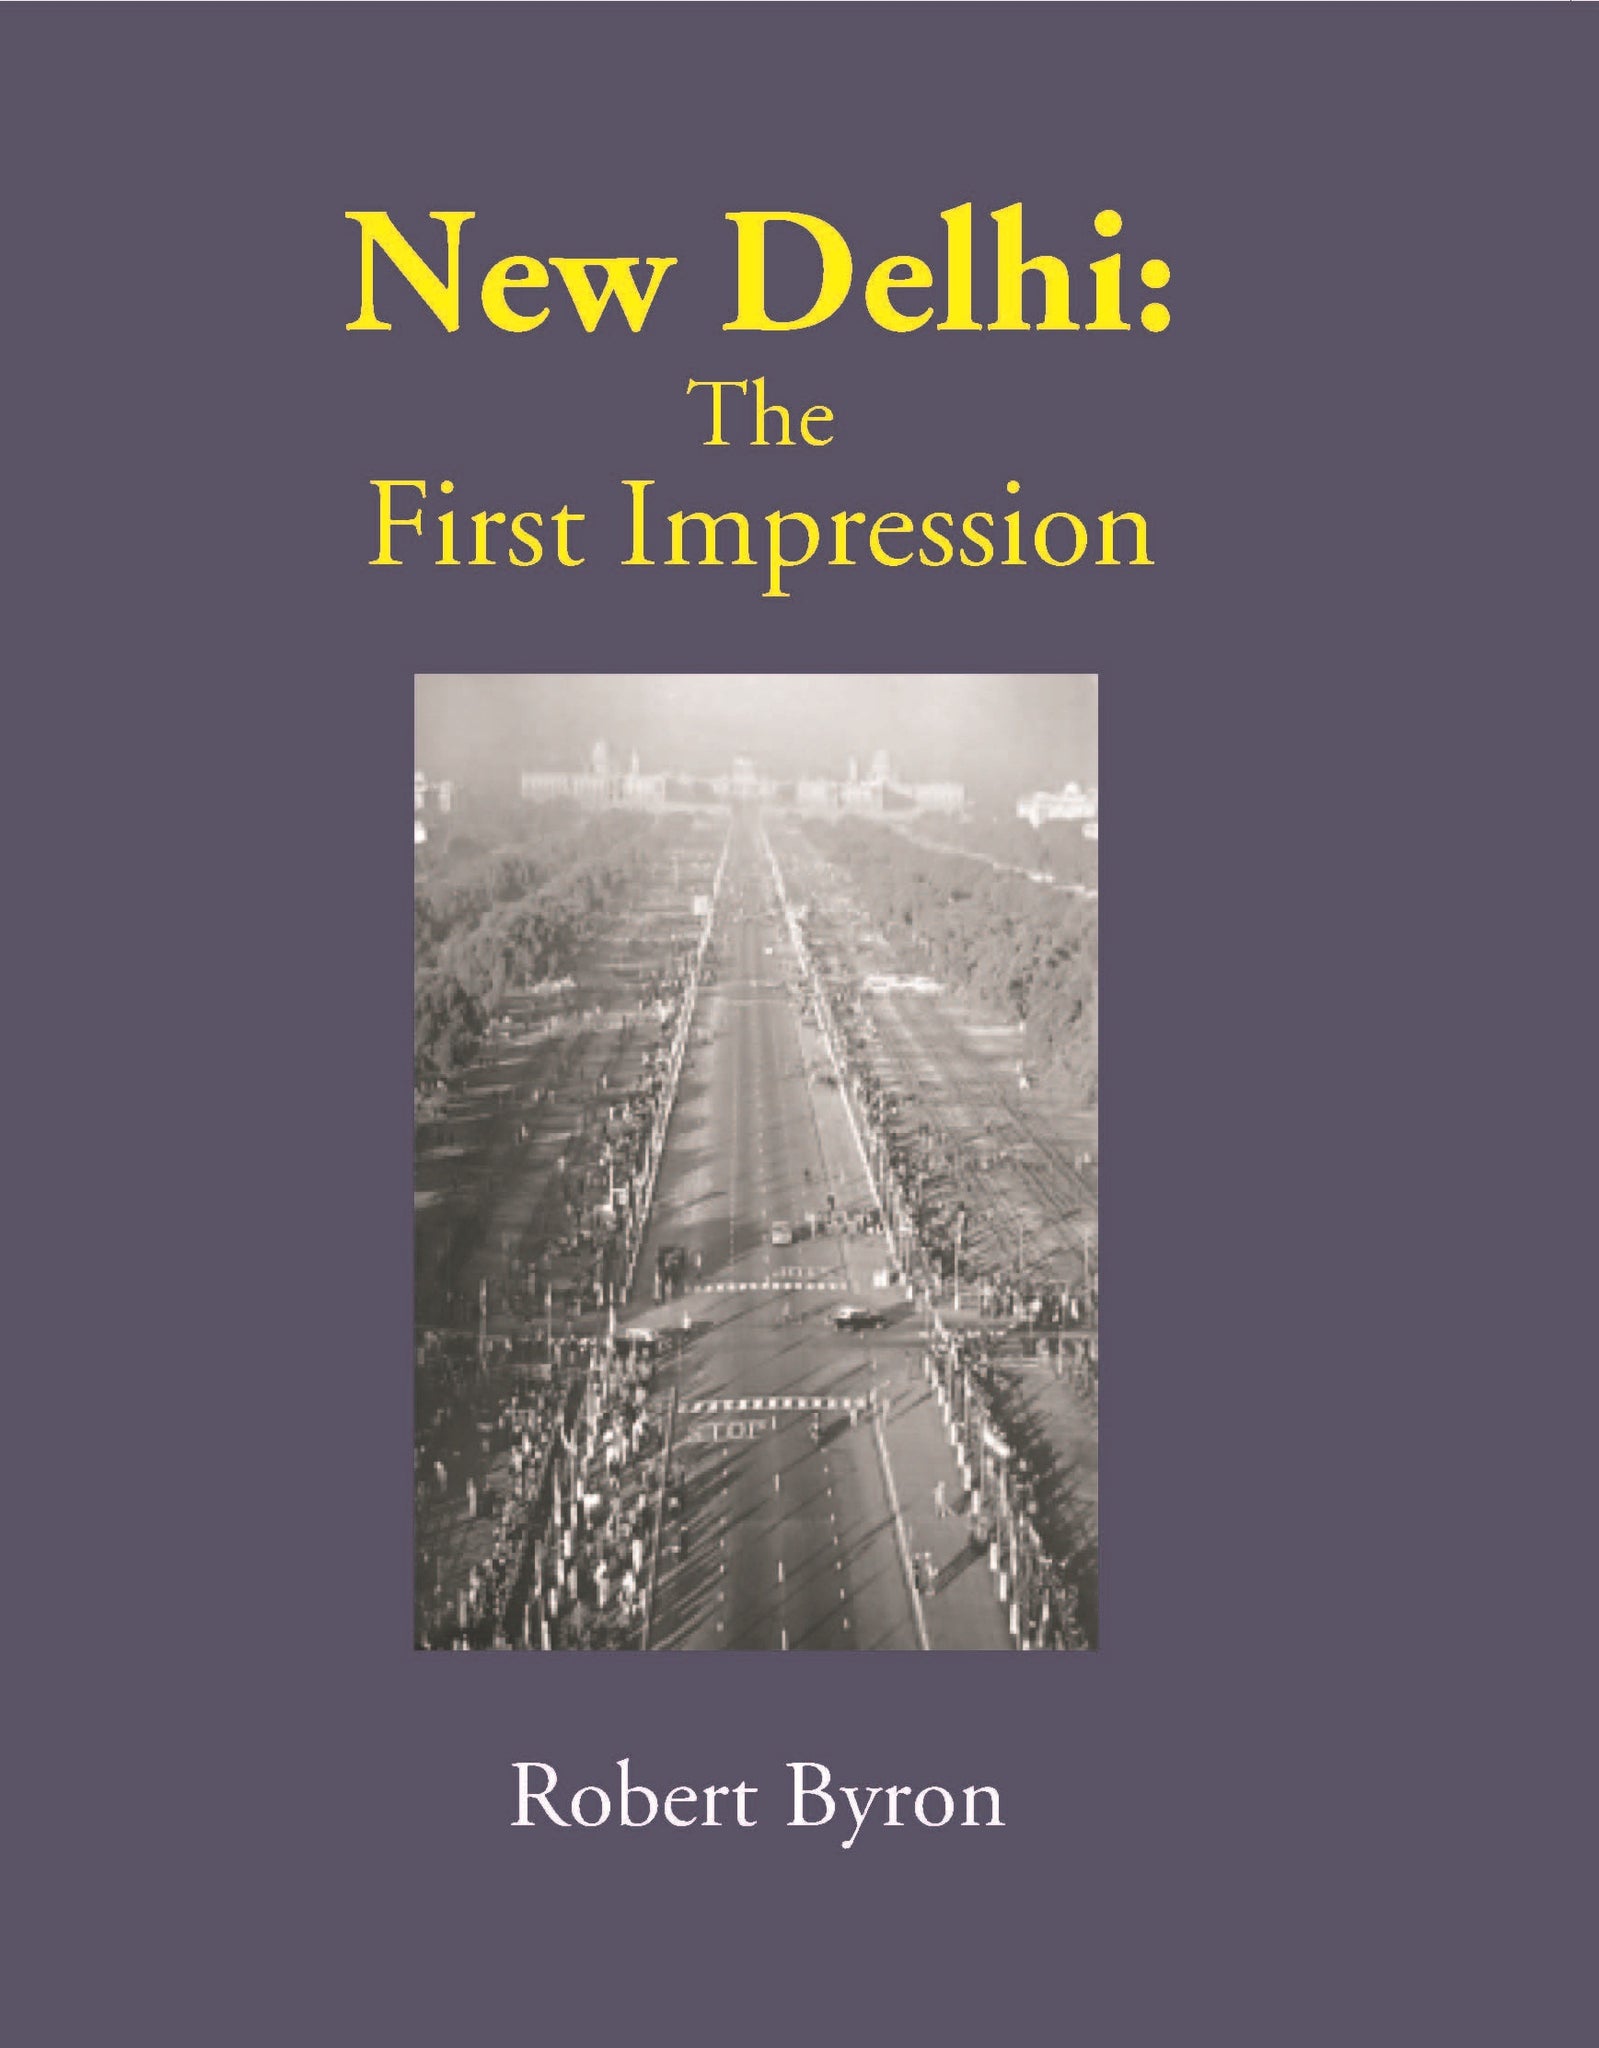 New Delhi: The First Impression